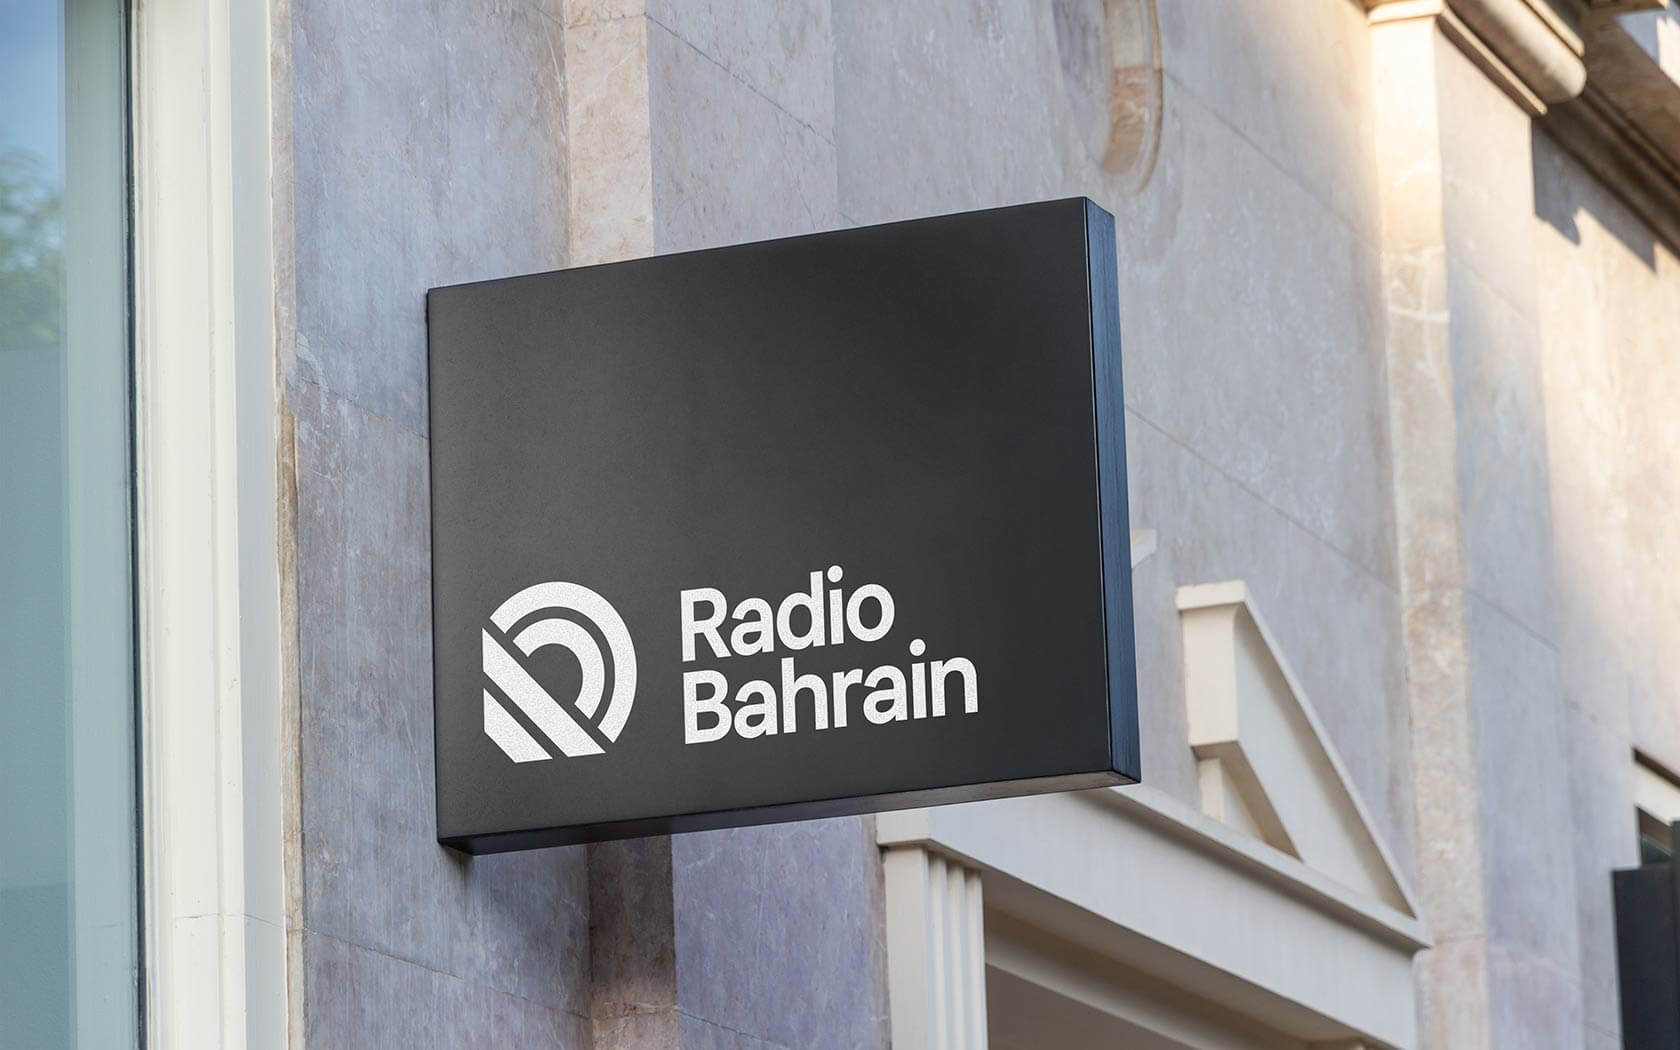 Radio Bahrain brand logo sign